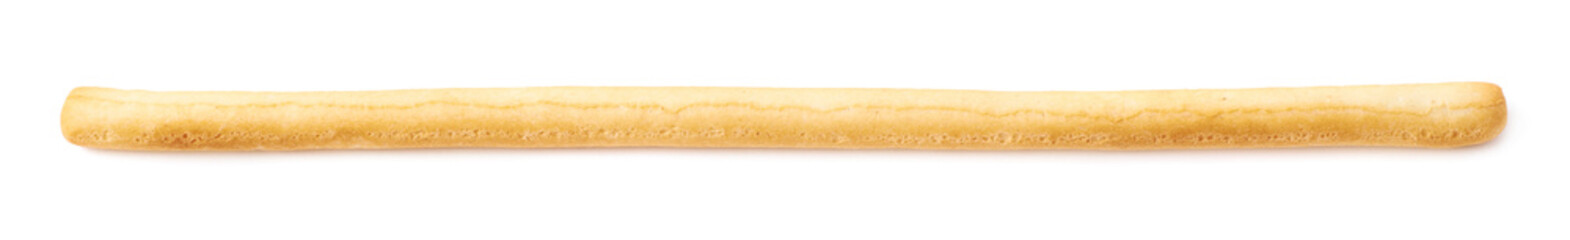 Single bread stick isolated